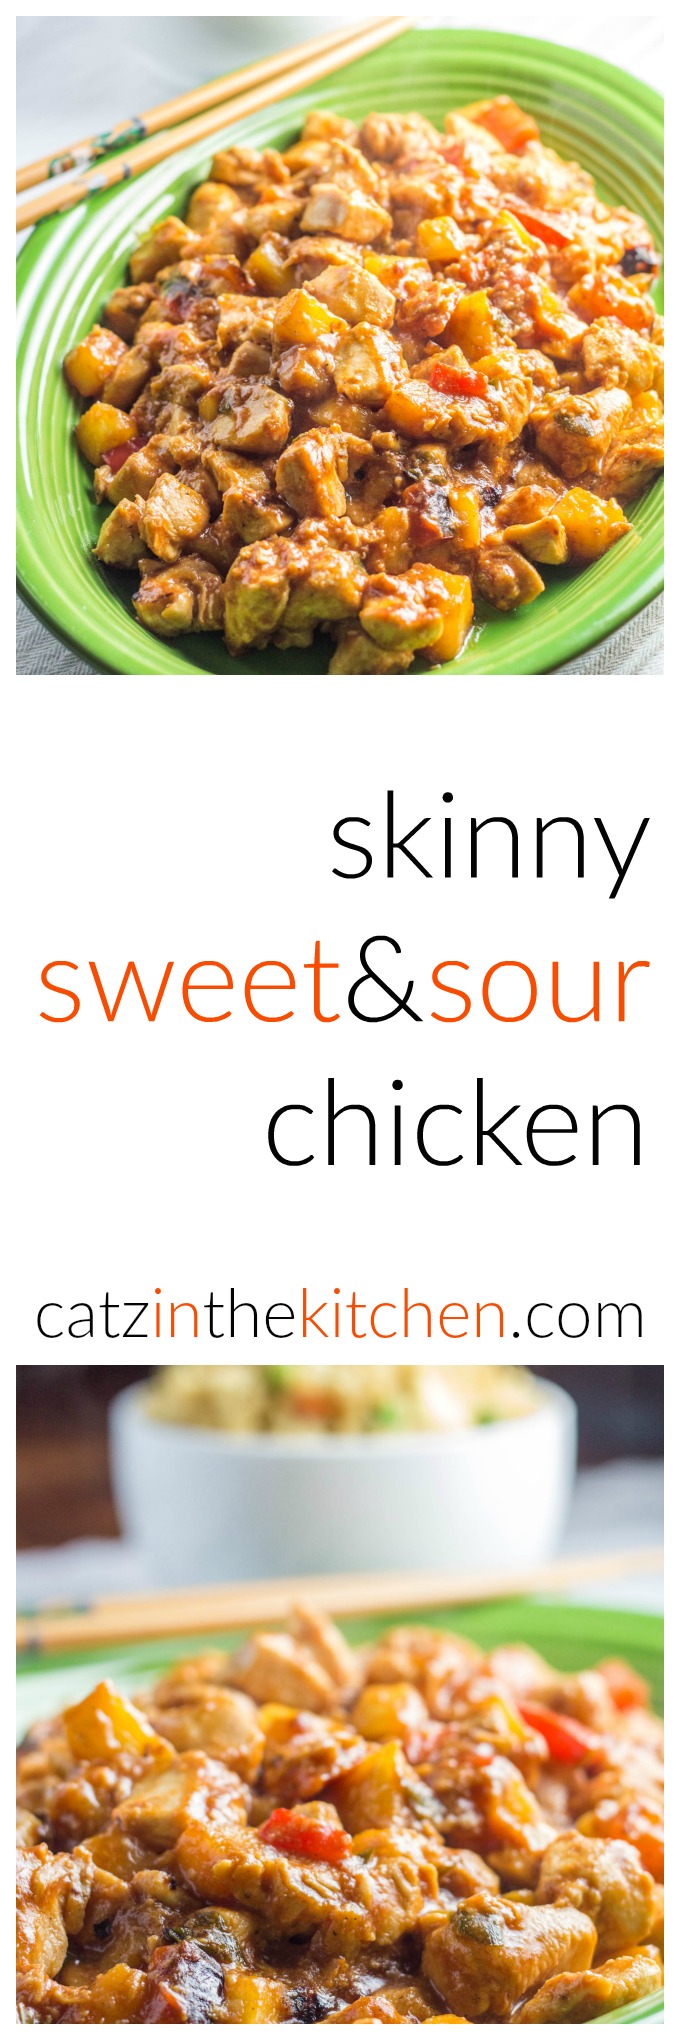 Skinny Sweet & Sour Chicken | Catz in the Kitchen | catzinthekitchen.com | #sweetandsour #healthy #skinny #recipe